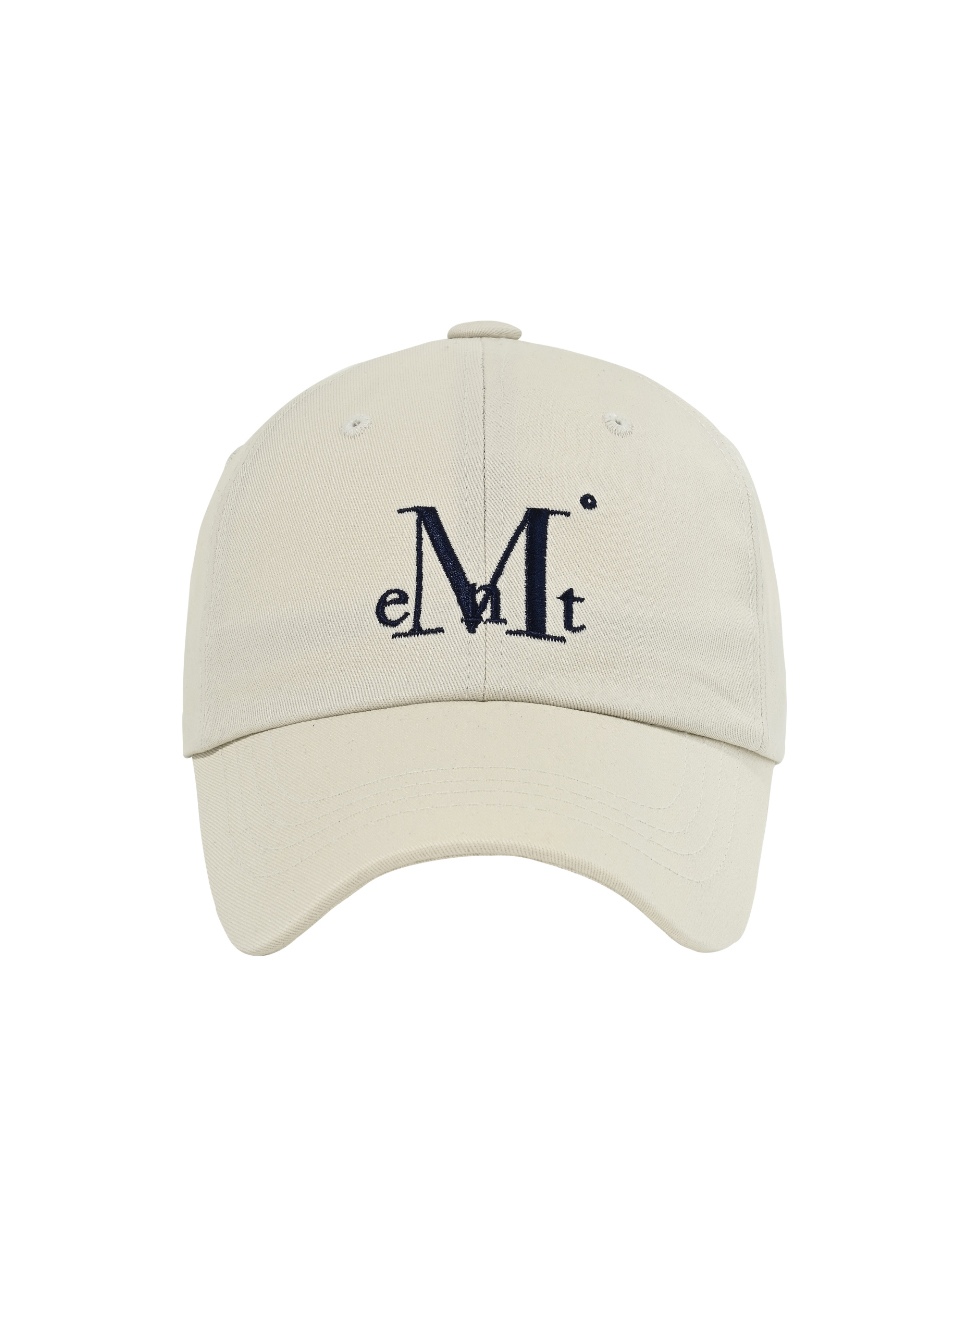 MUCENT BALL CAP - 무센트 볼캡 (Cream)